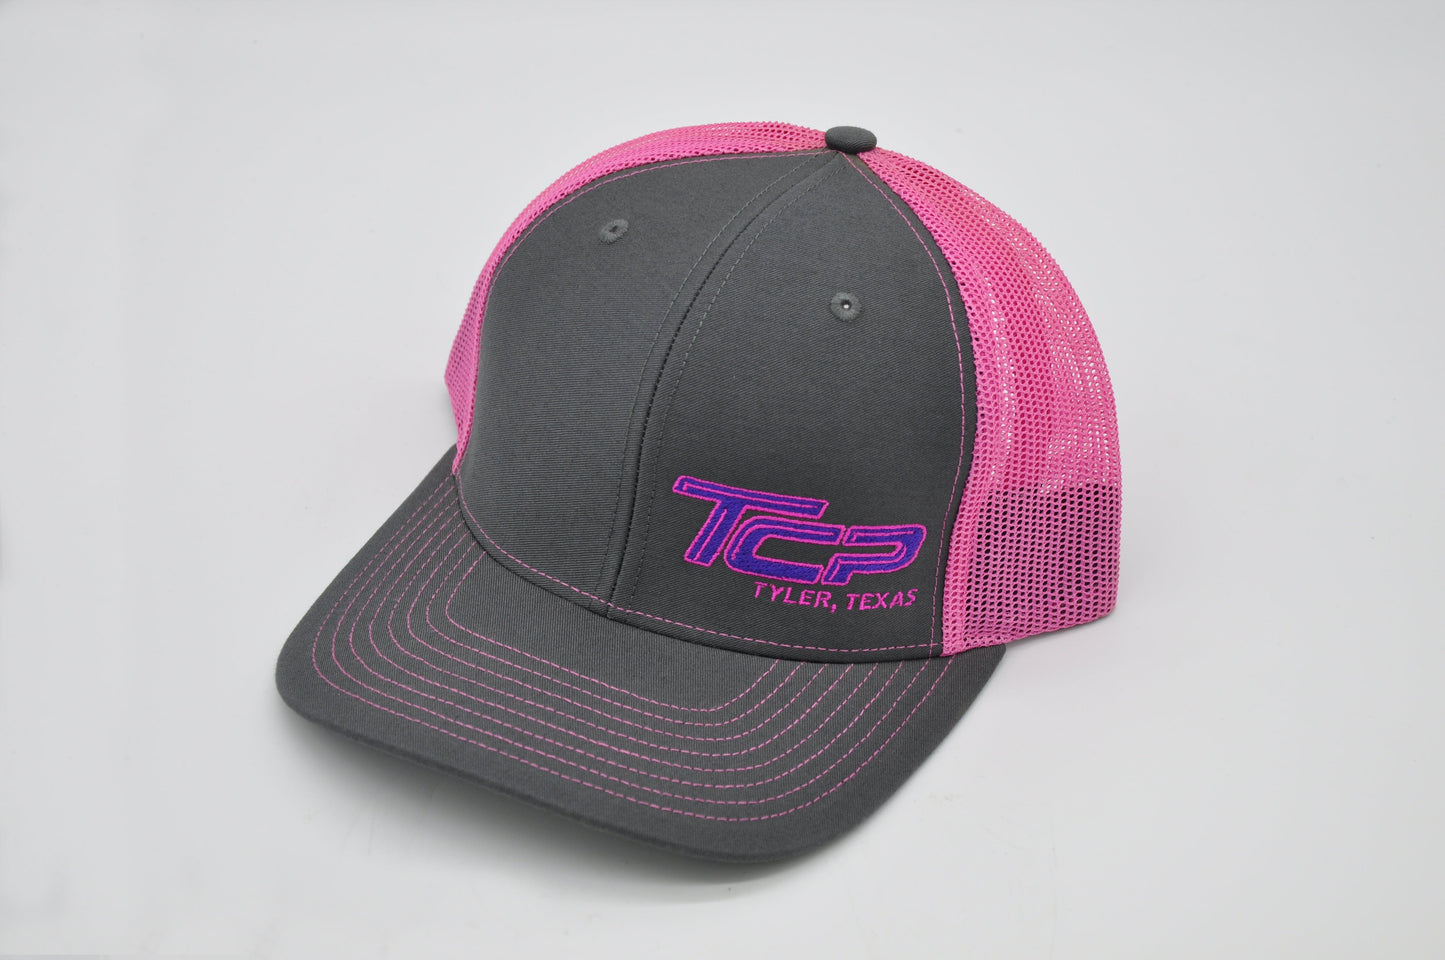 TCP Grey Hat/Cap (Pink Mesh)